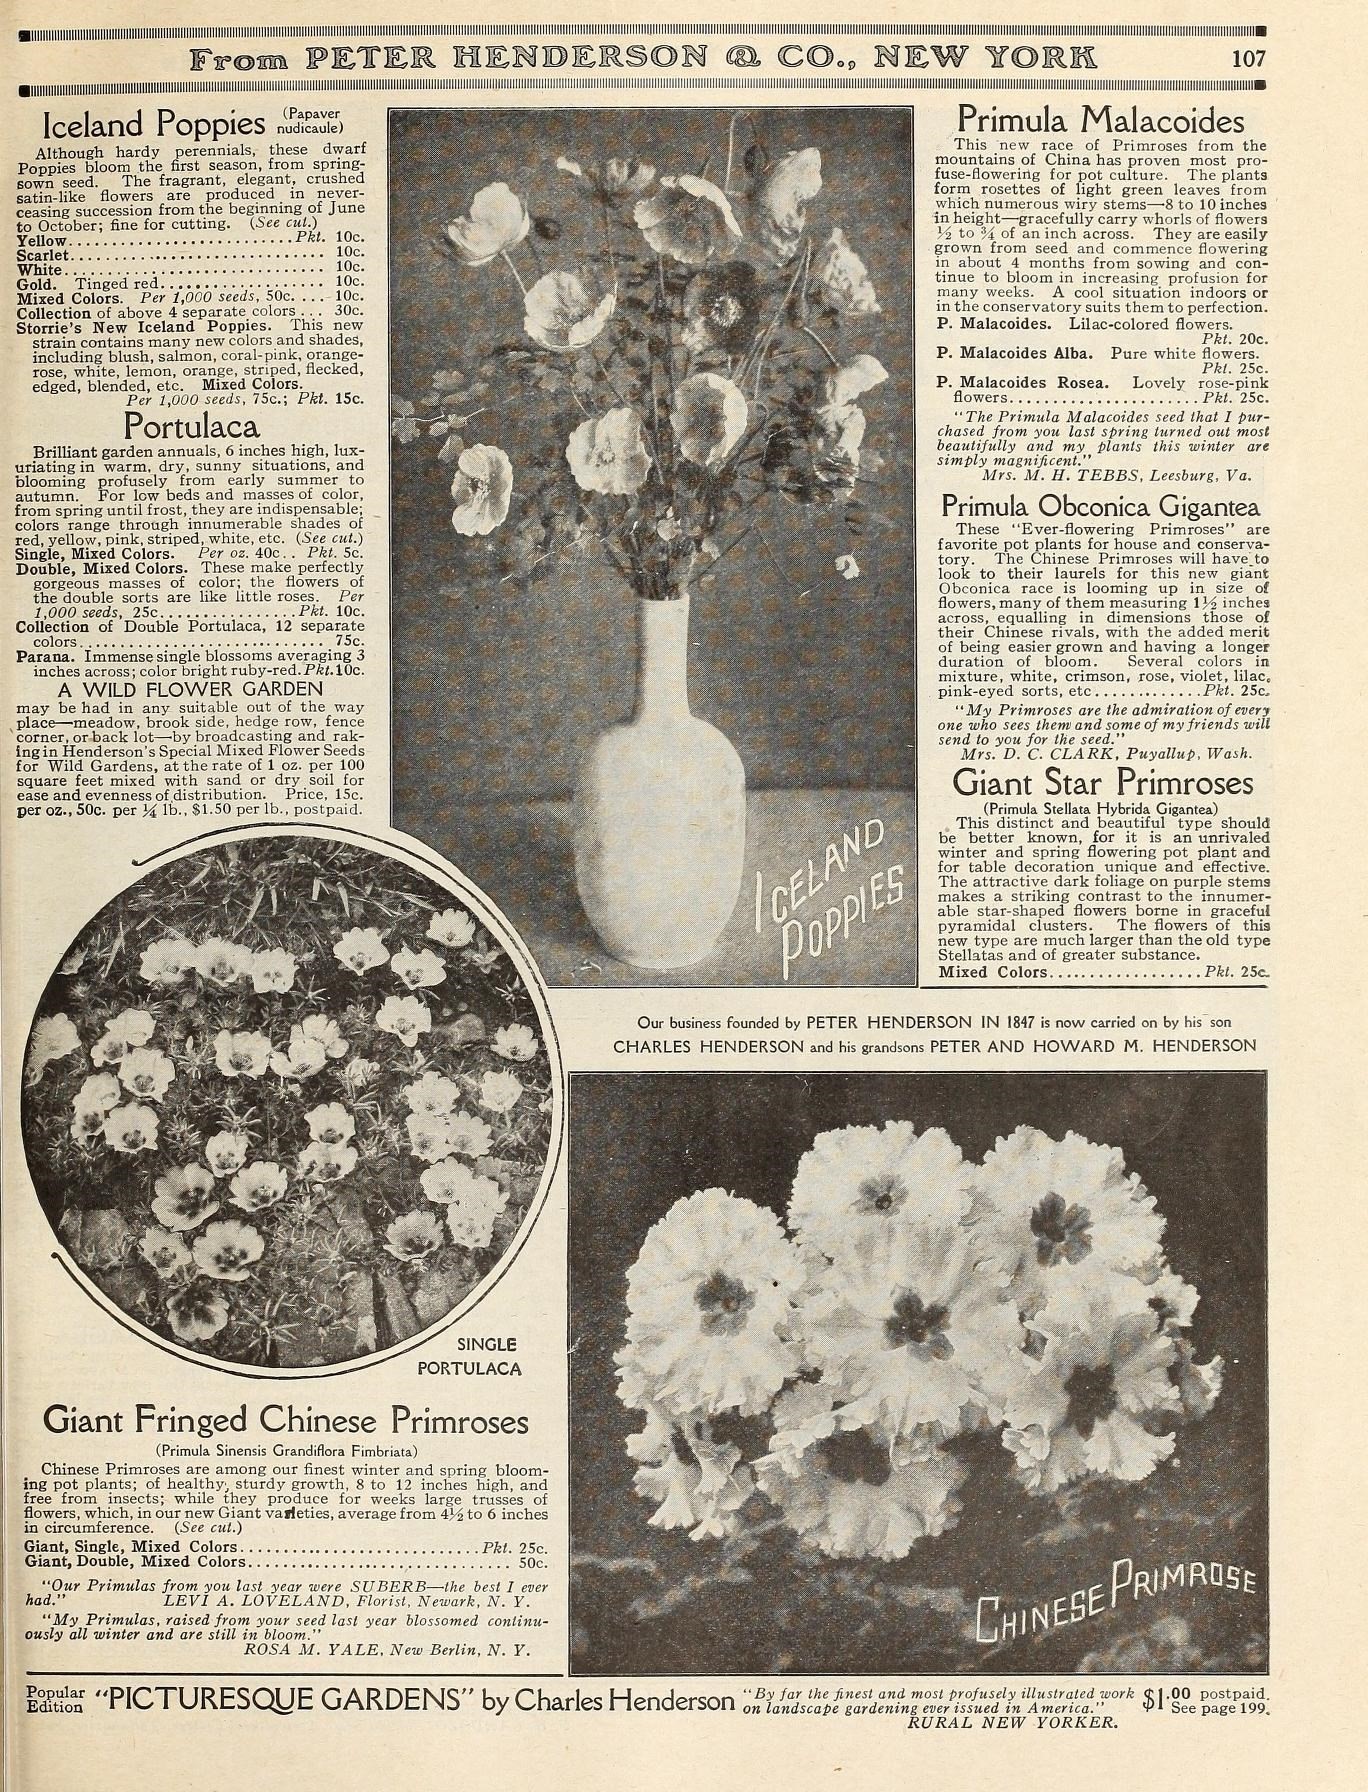 an old newspaper advertit showing flowers in vase